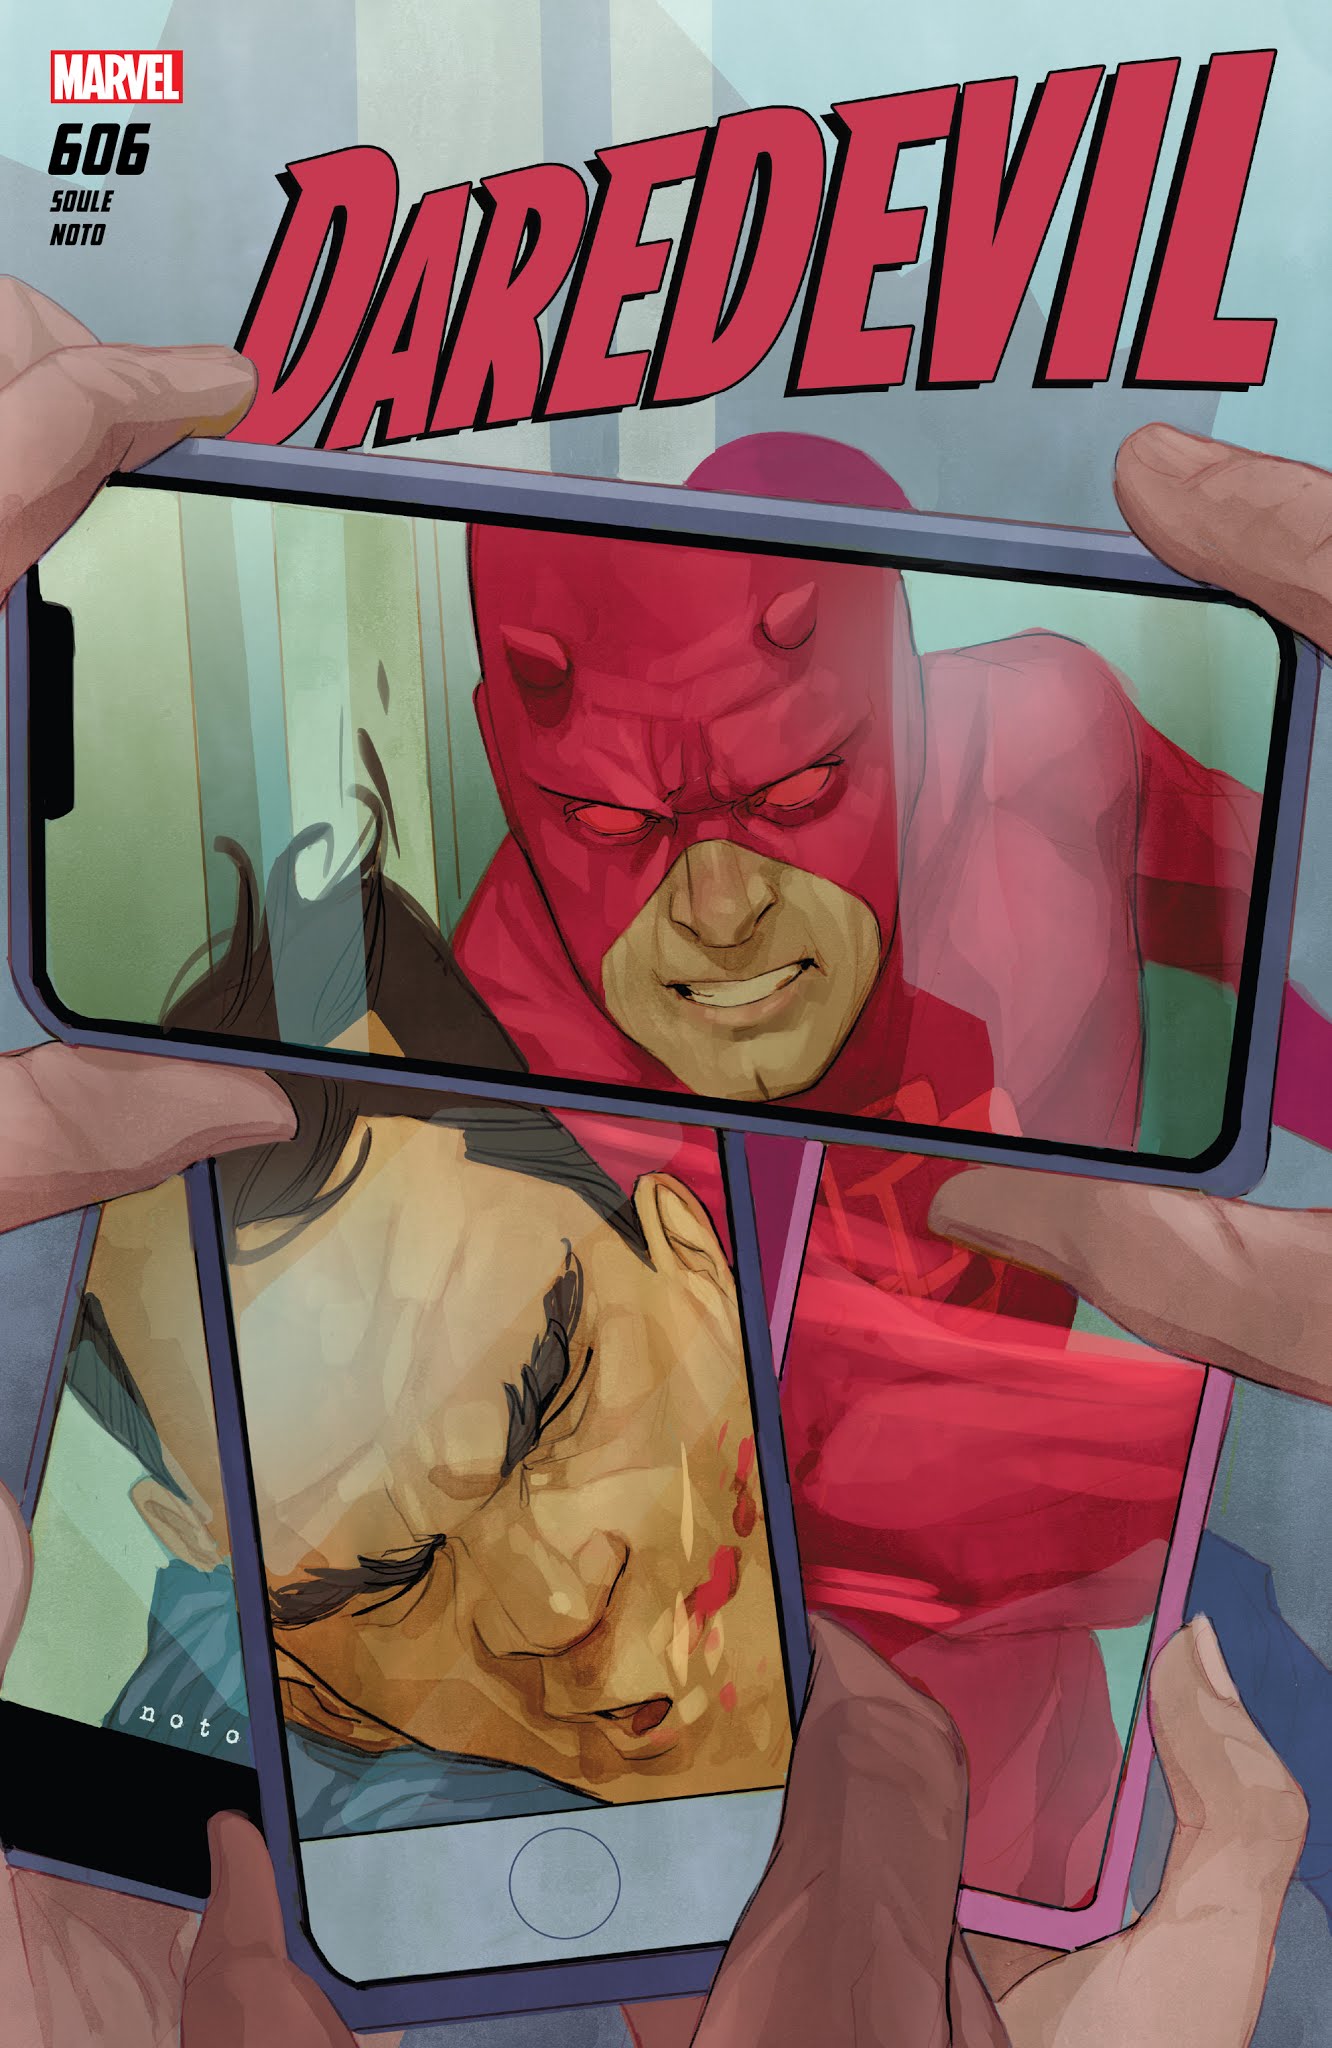 Read online Daredevil (2016) comic -  Issue #606 - 1